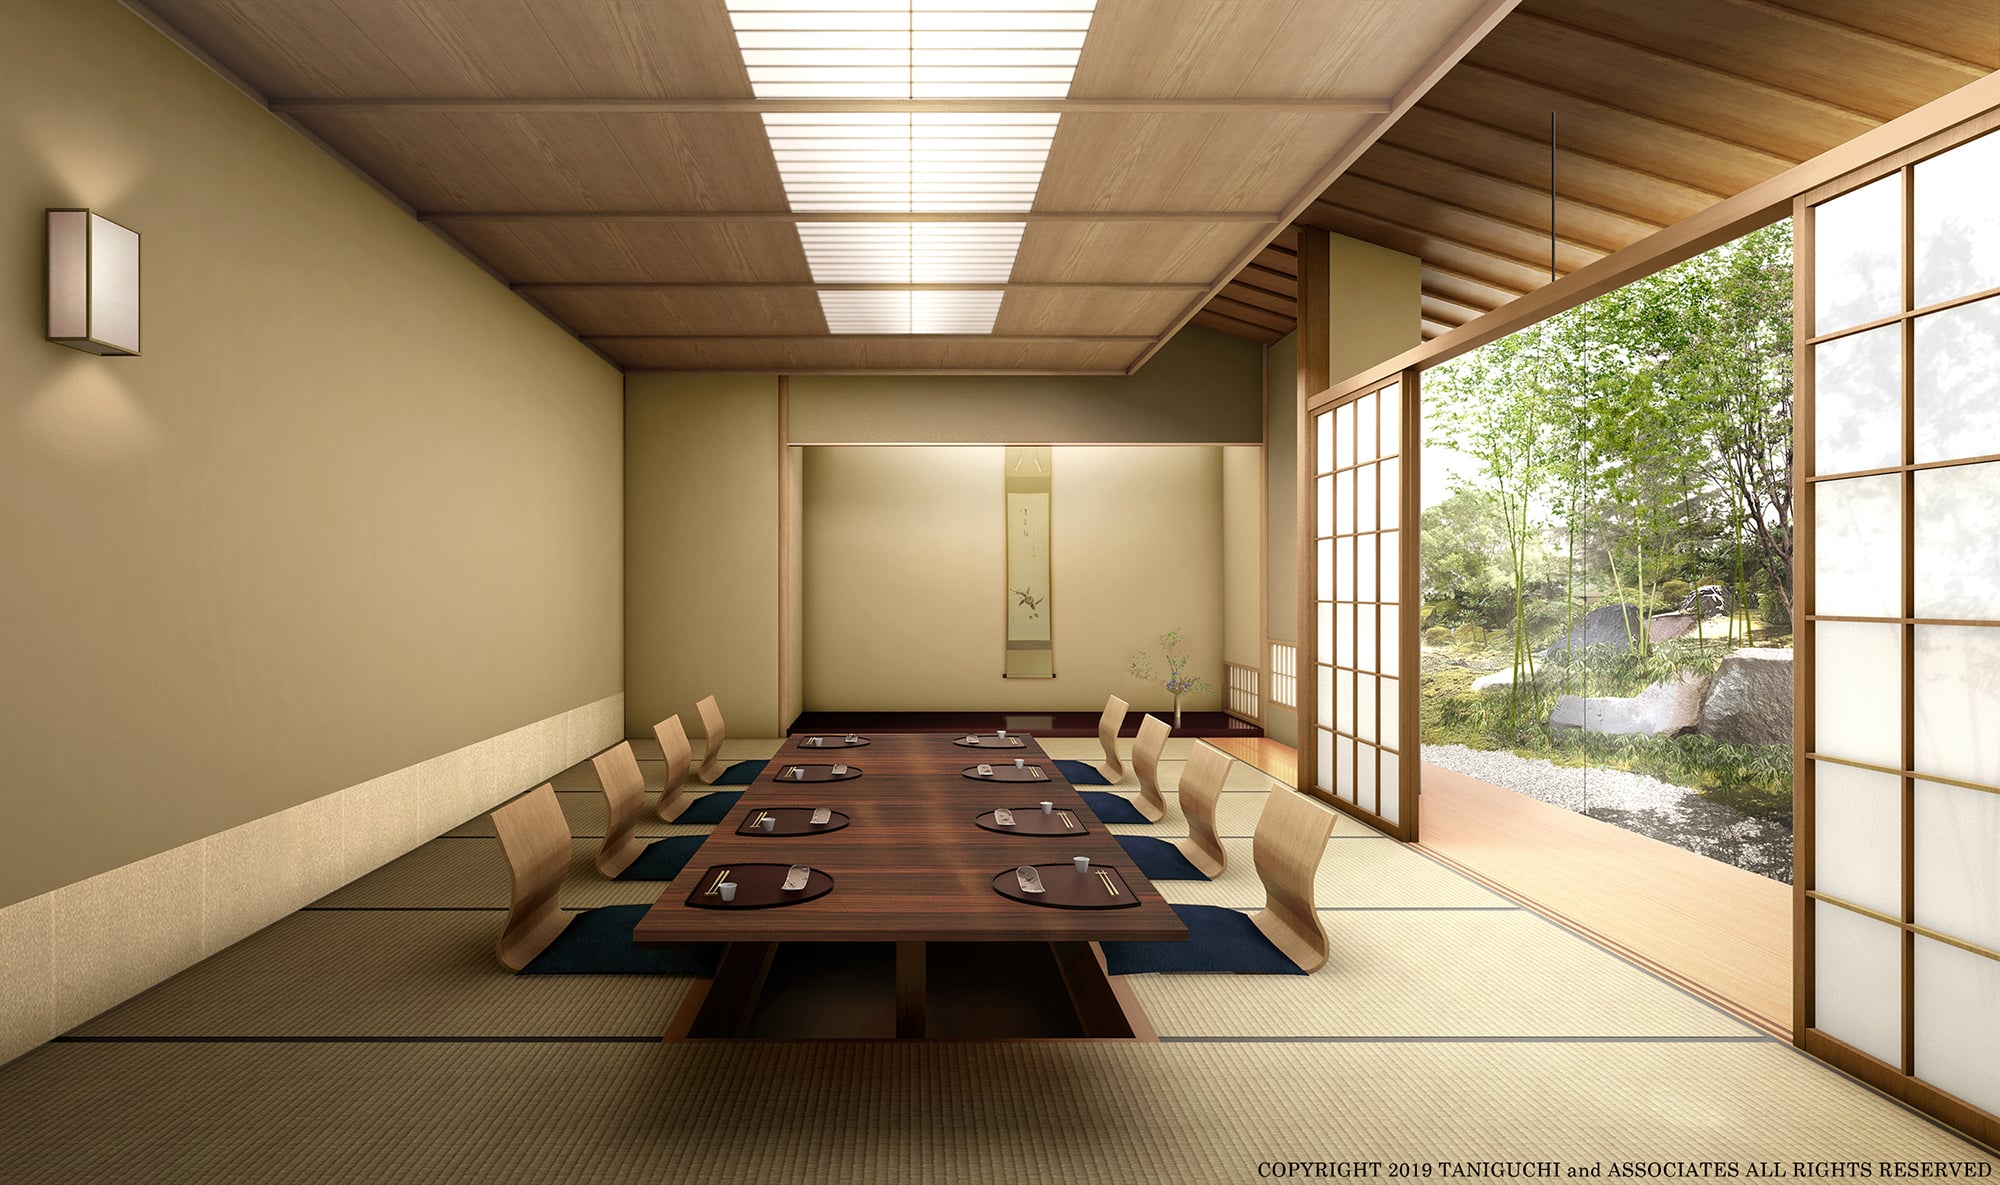 The Okura Tokyoの山里の個室イメージ。